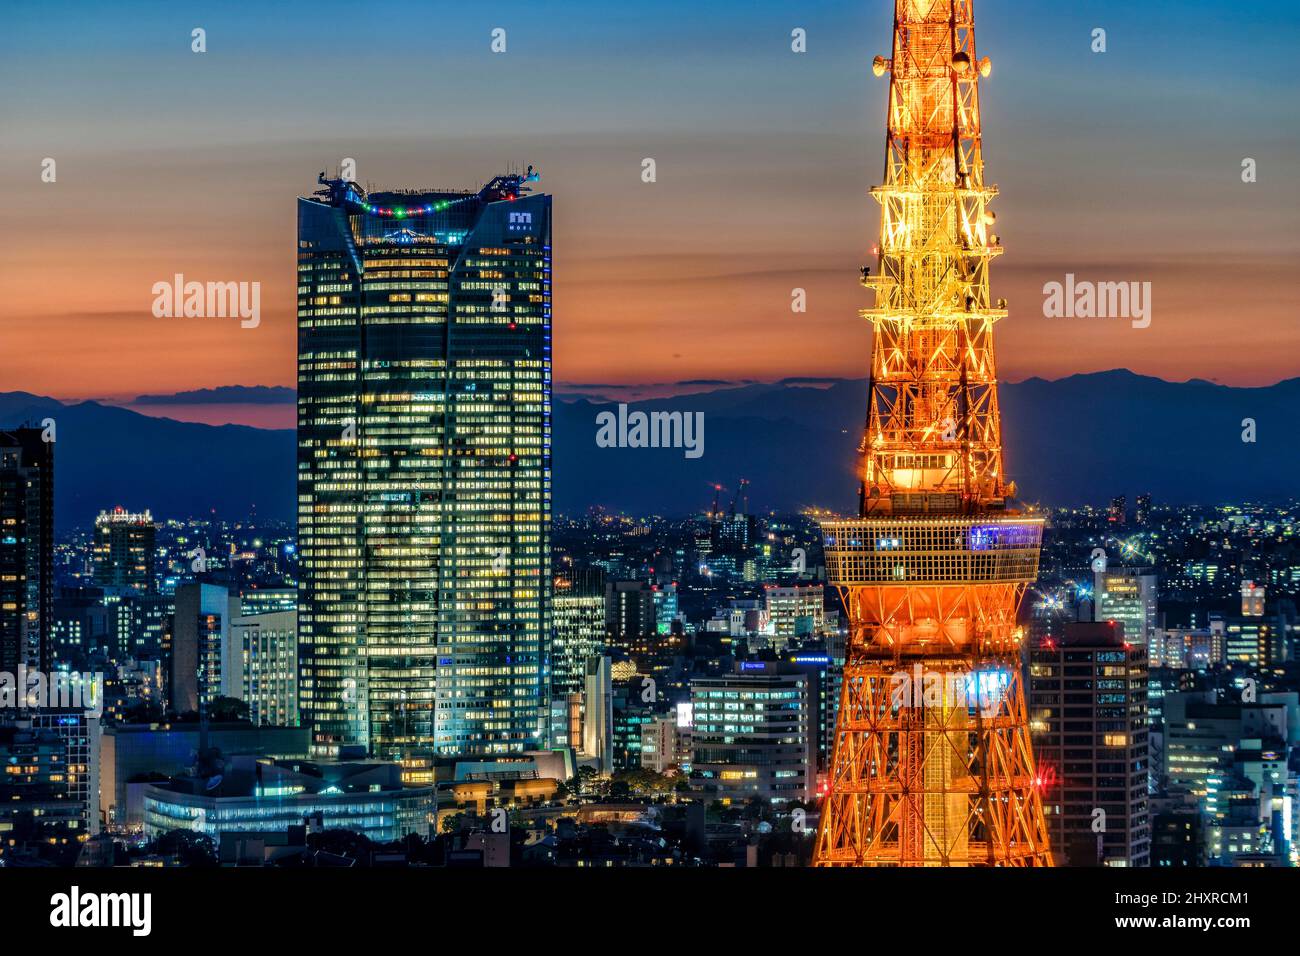 Japan, Honshu island, Kanto, Tokyo, the Tokyo Tower and the Mori Tower at sunset. Stock Photo